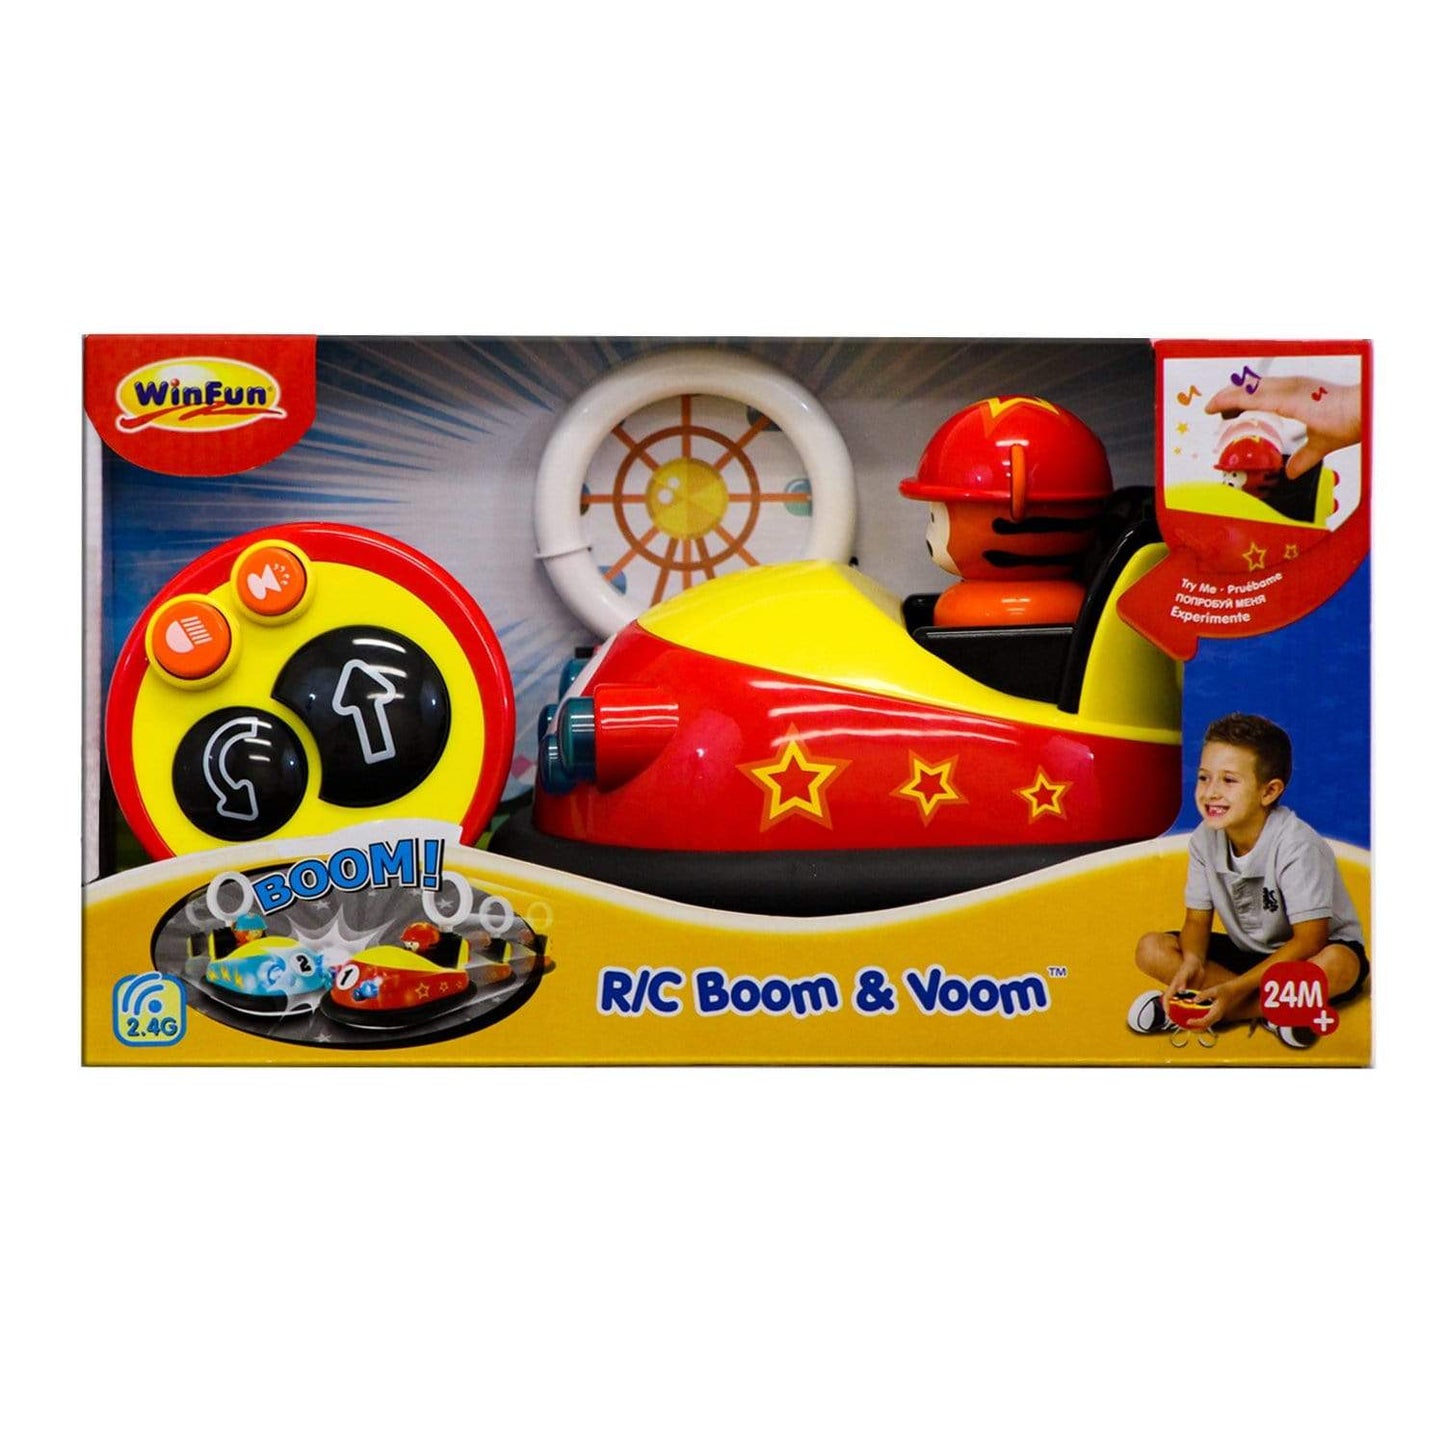 winfun Toys Winfun R/C Boom & Voom Red/Blue